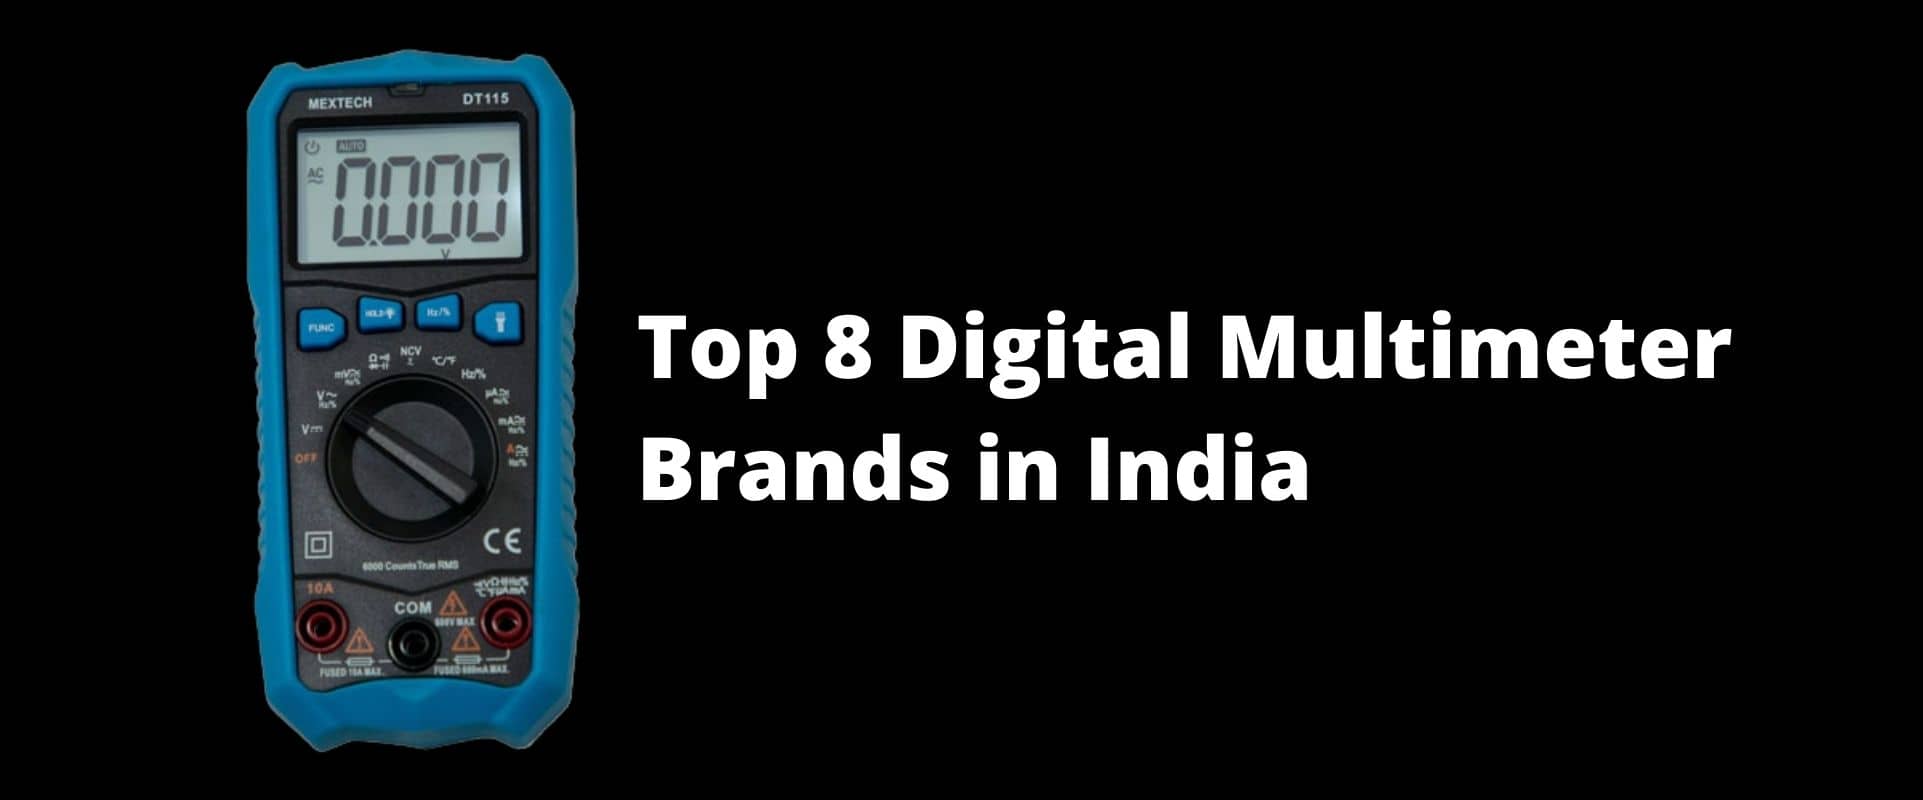 Top Digital Multimeter Brands in India